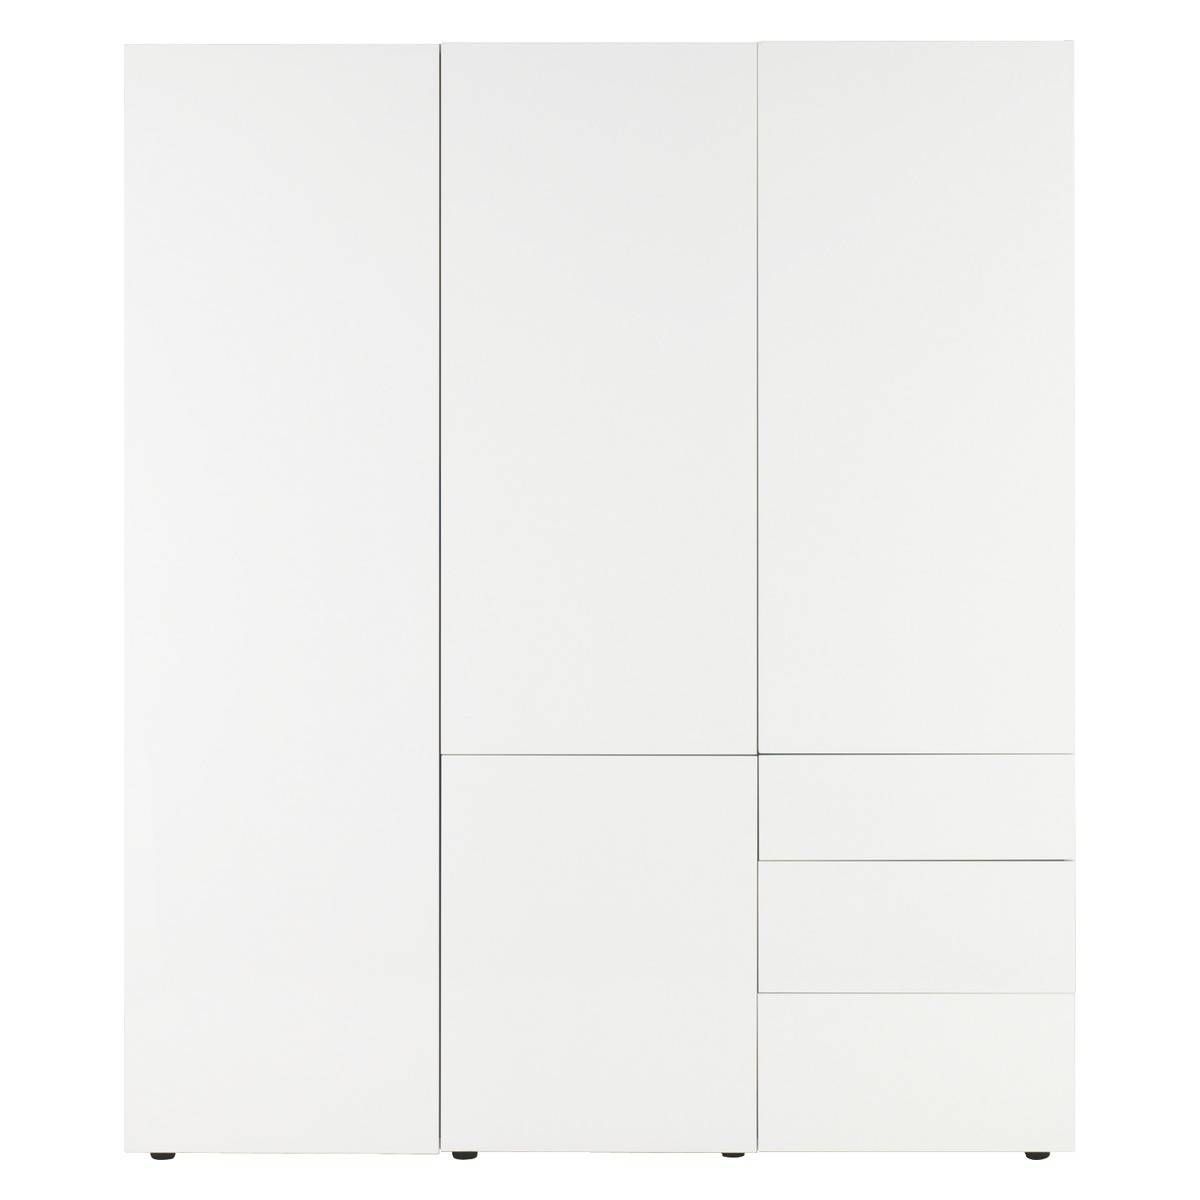 Perouse White 3 Door Wardrobe 180cm Width | Buy Now At Habitat Uk Inside White 3 Door Wardrobes (Photo 11 of 15)